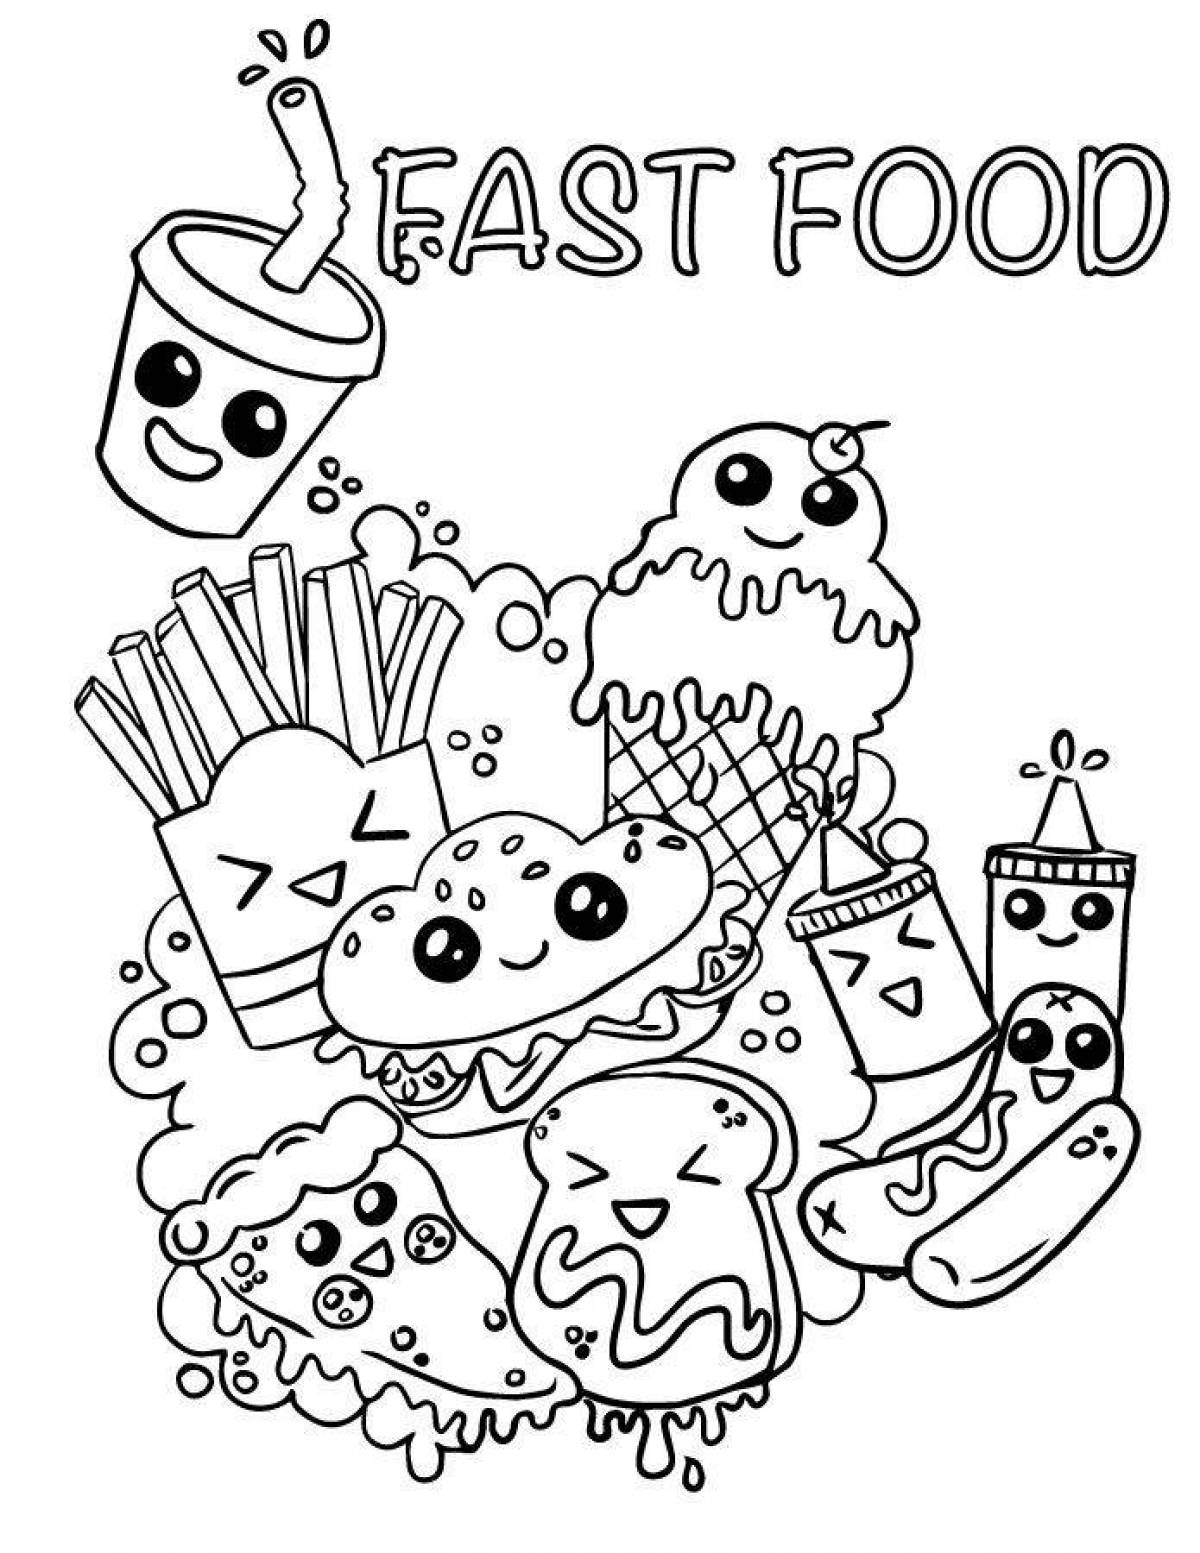 Coloring page juicy fast food